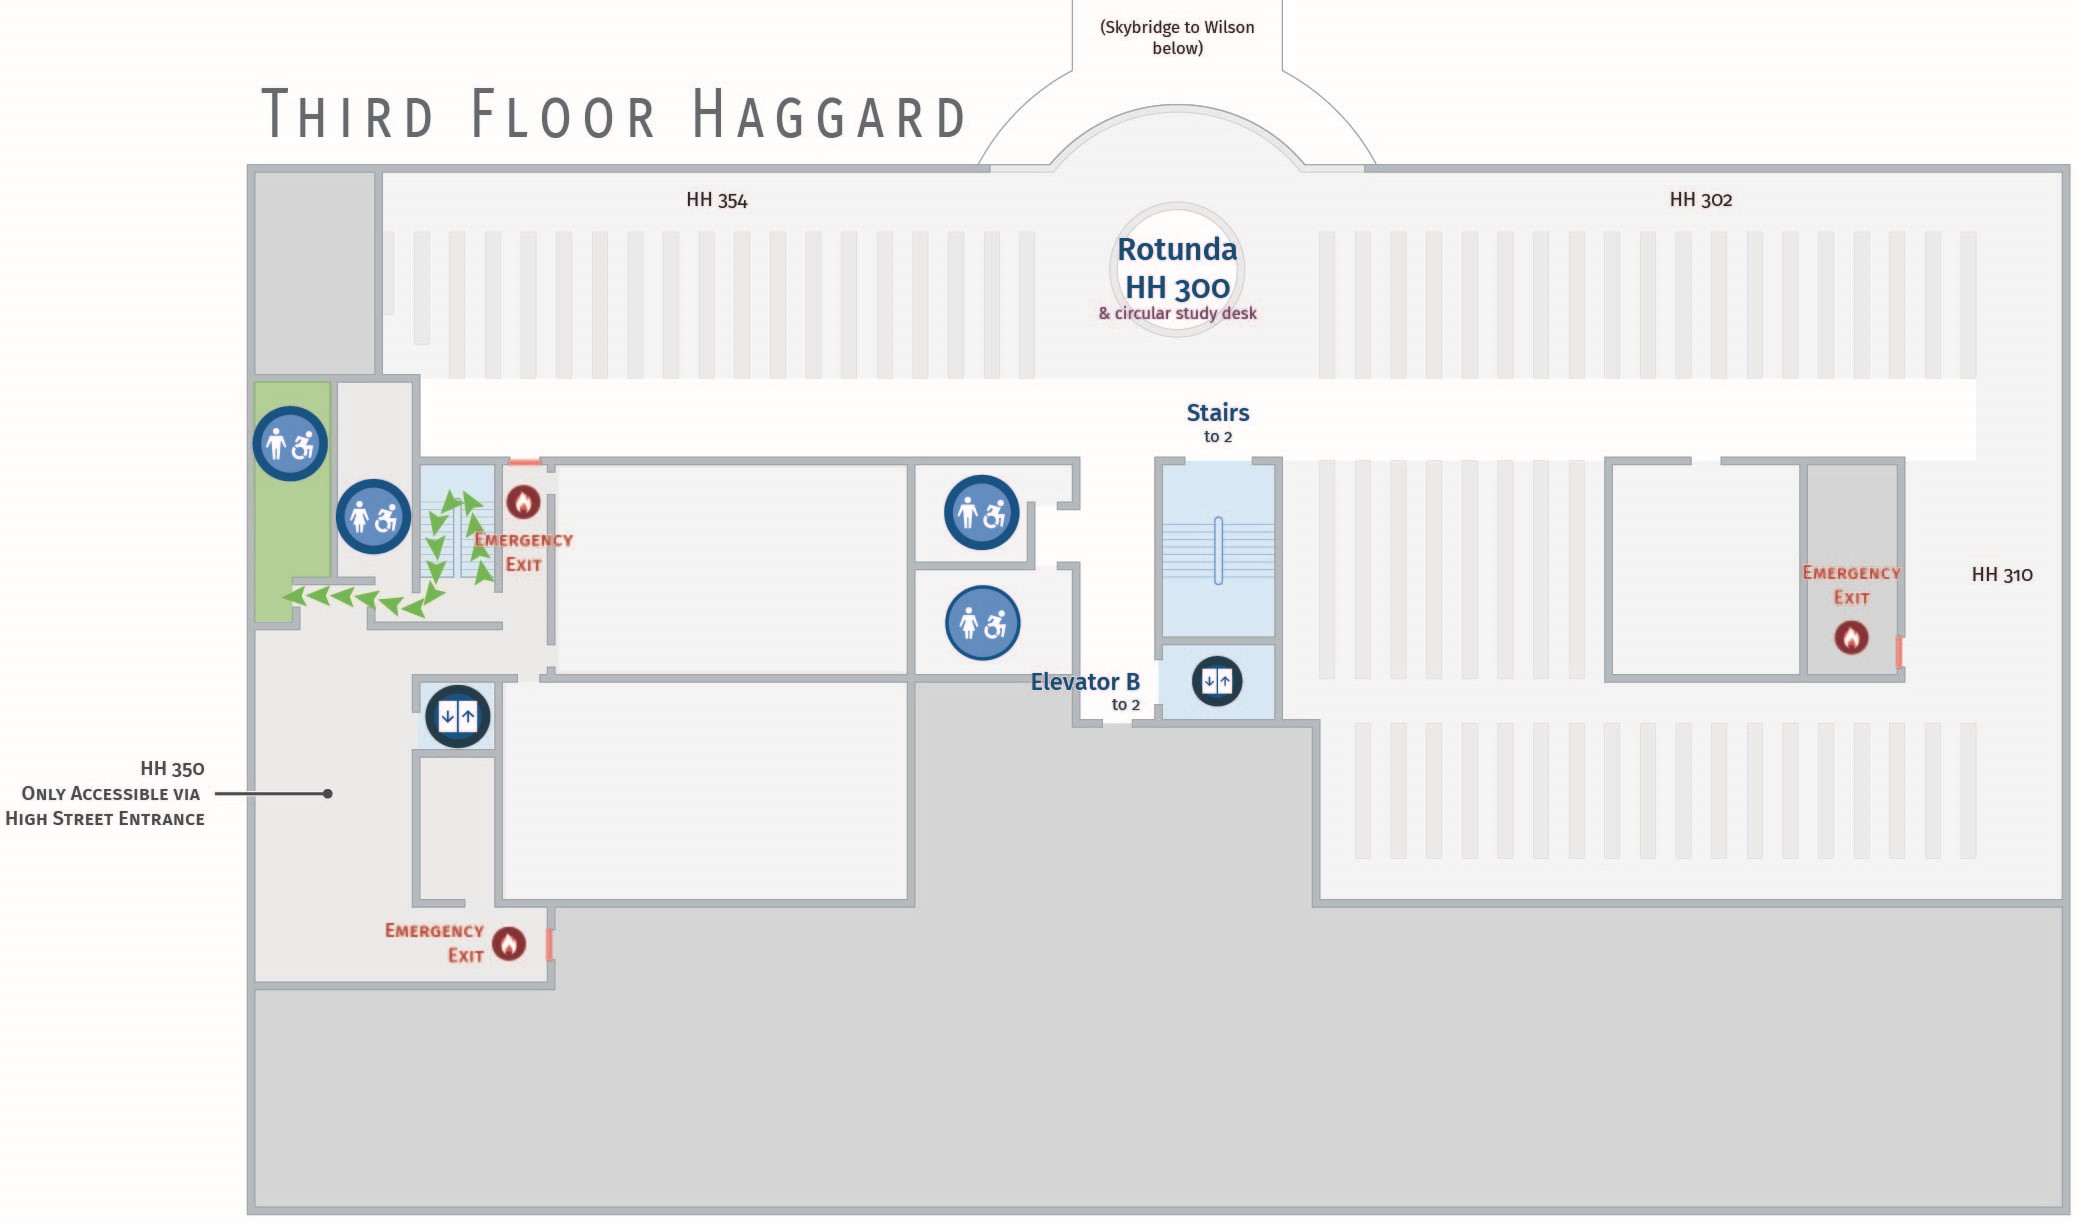 Floor plan, third floor of Haggard with path to men's restroom. Haggard 351.